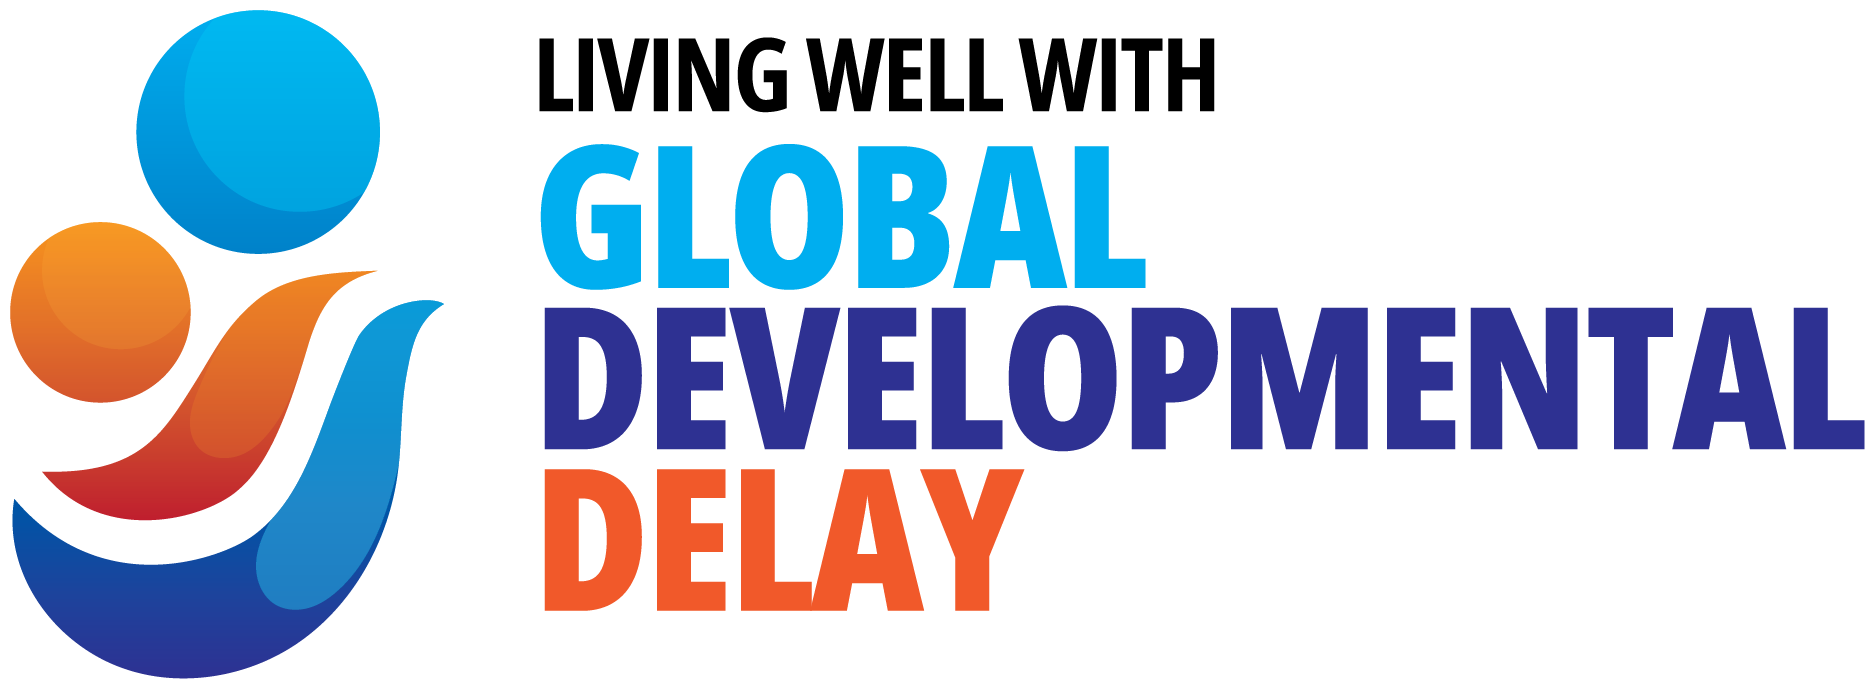 Global Developmental Delay